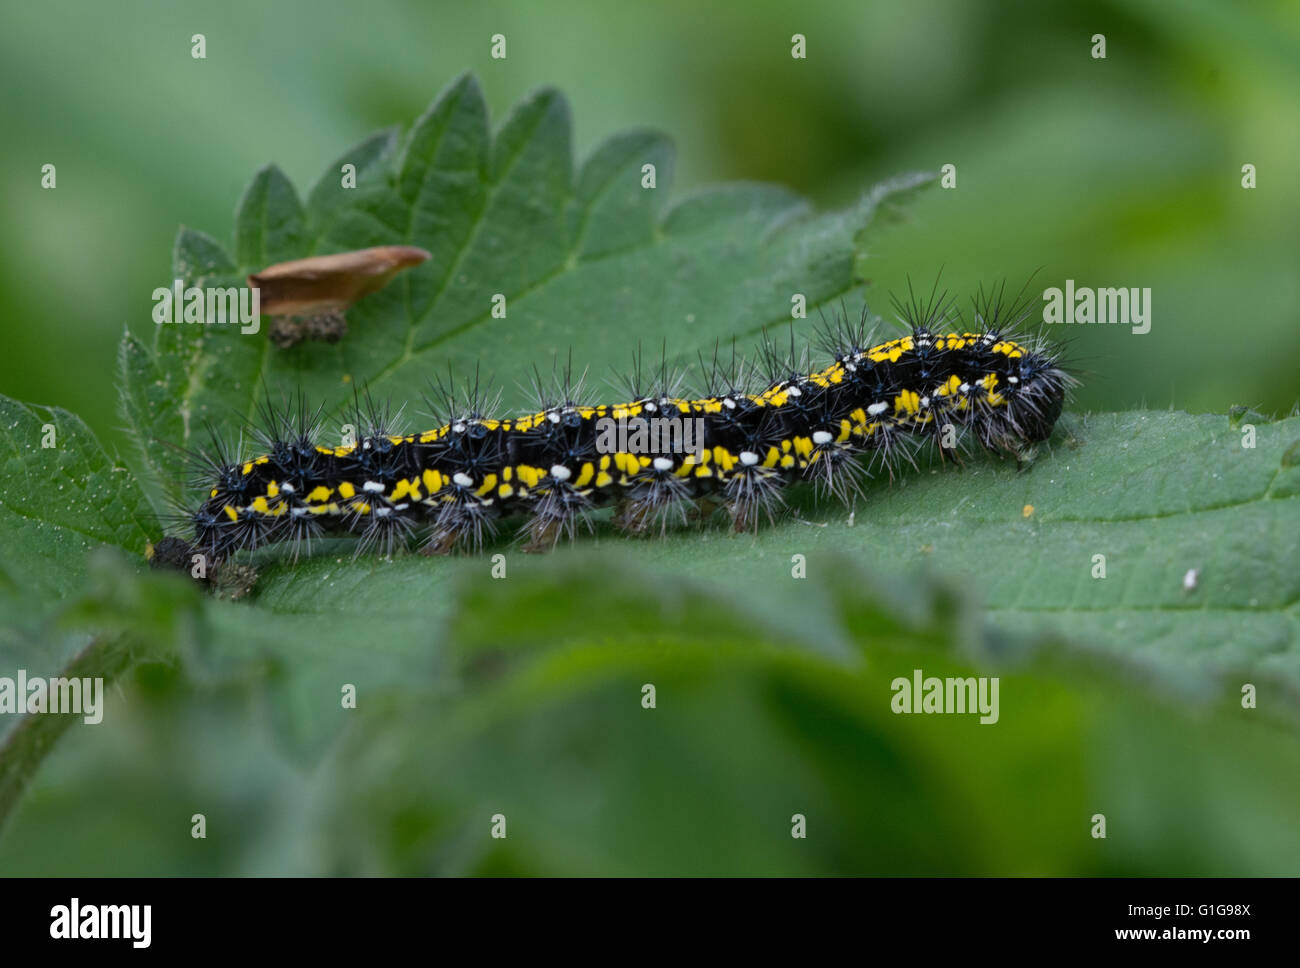 Caterpillar or larva of scarlet tiger moth (Callimorpha dominula) on nettle, UK Stock Photo